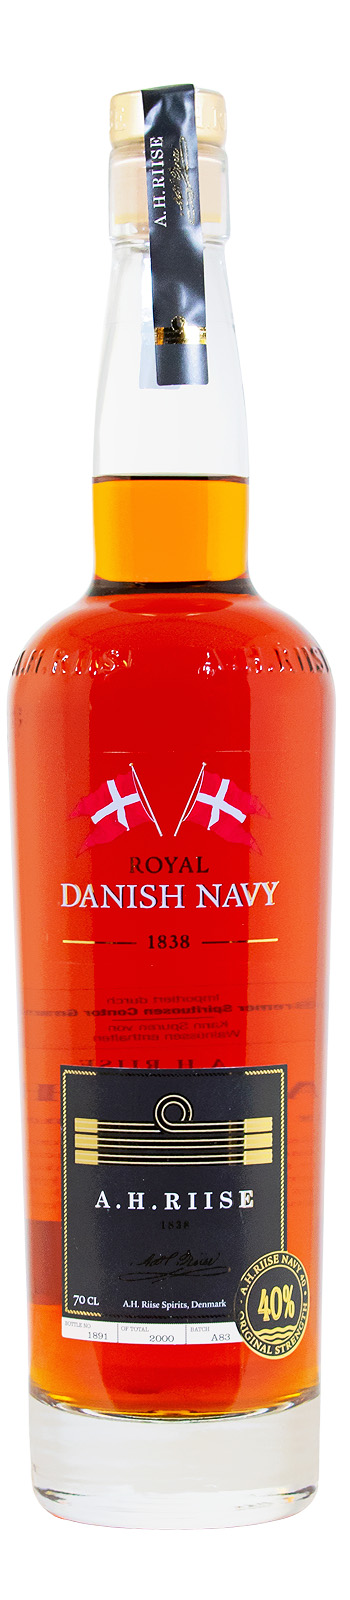 A.H. Riise Danish Navy Spirituose auf Rum-Basis - 0,7L 40% vol